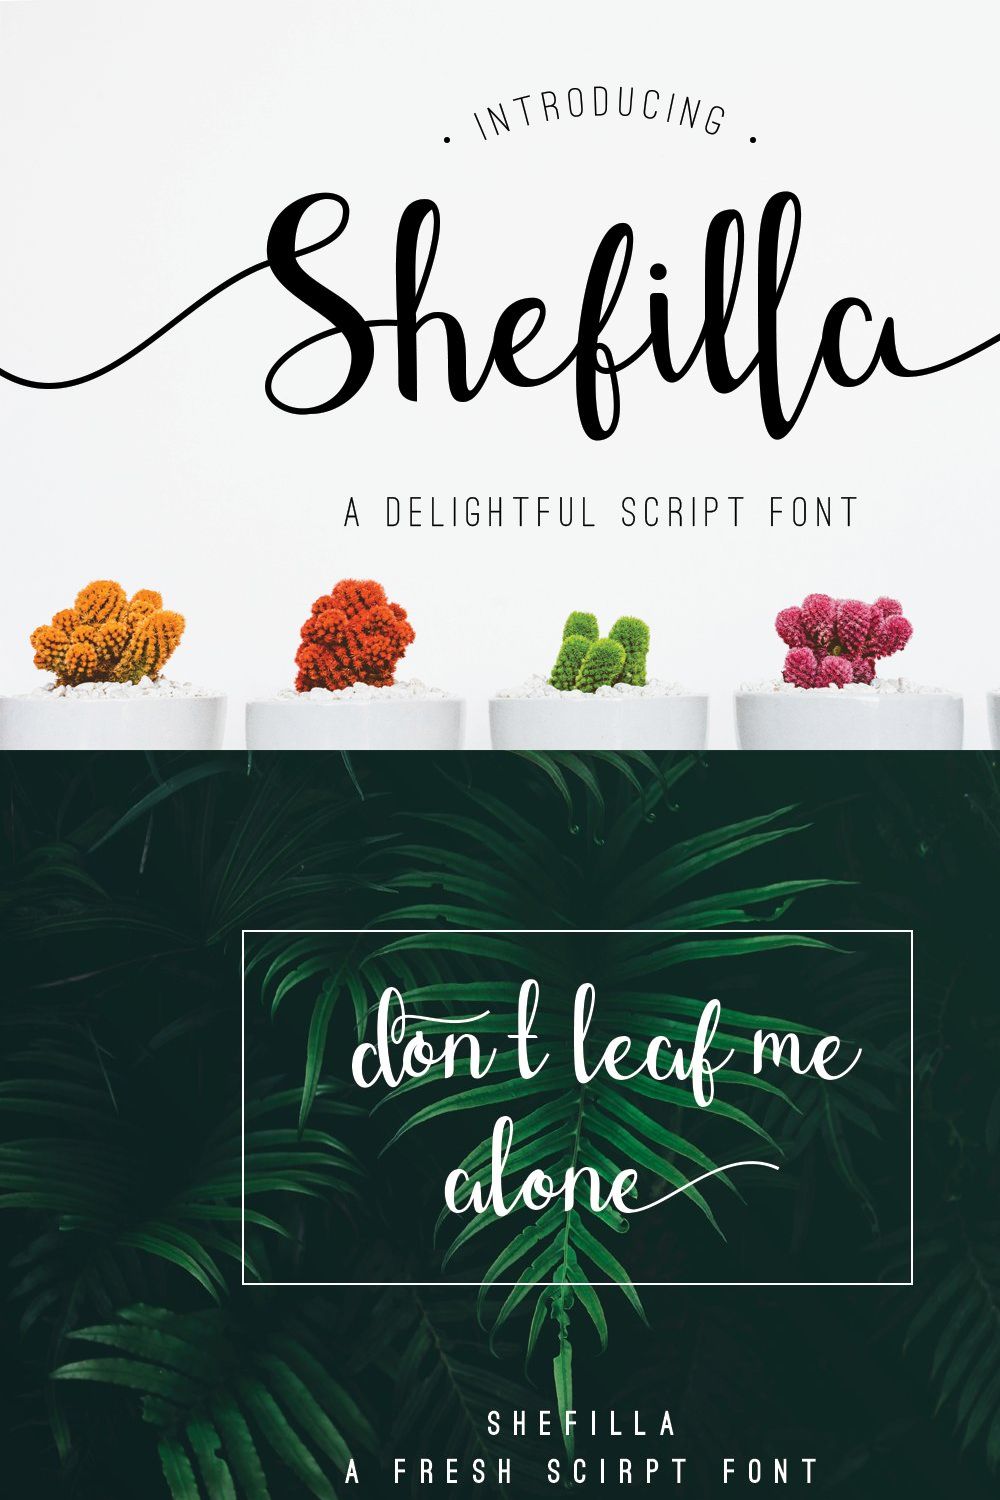 Shefilla - Script Font pinterest preview image.